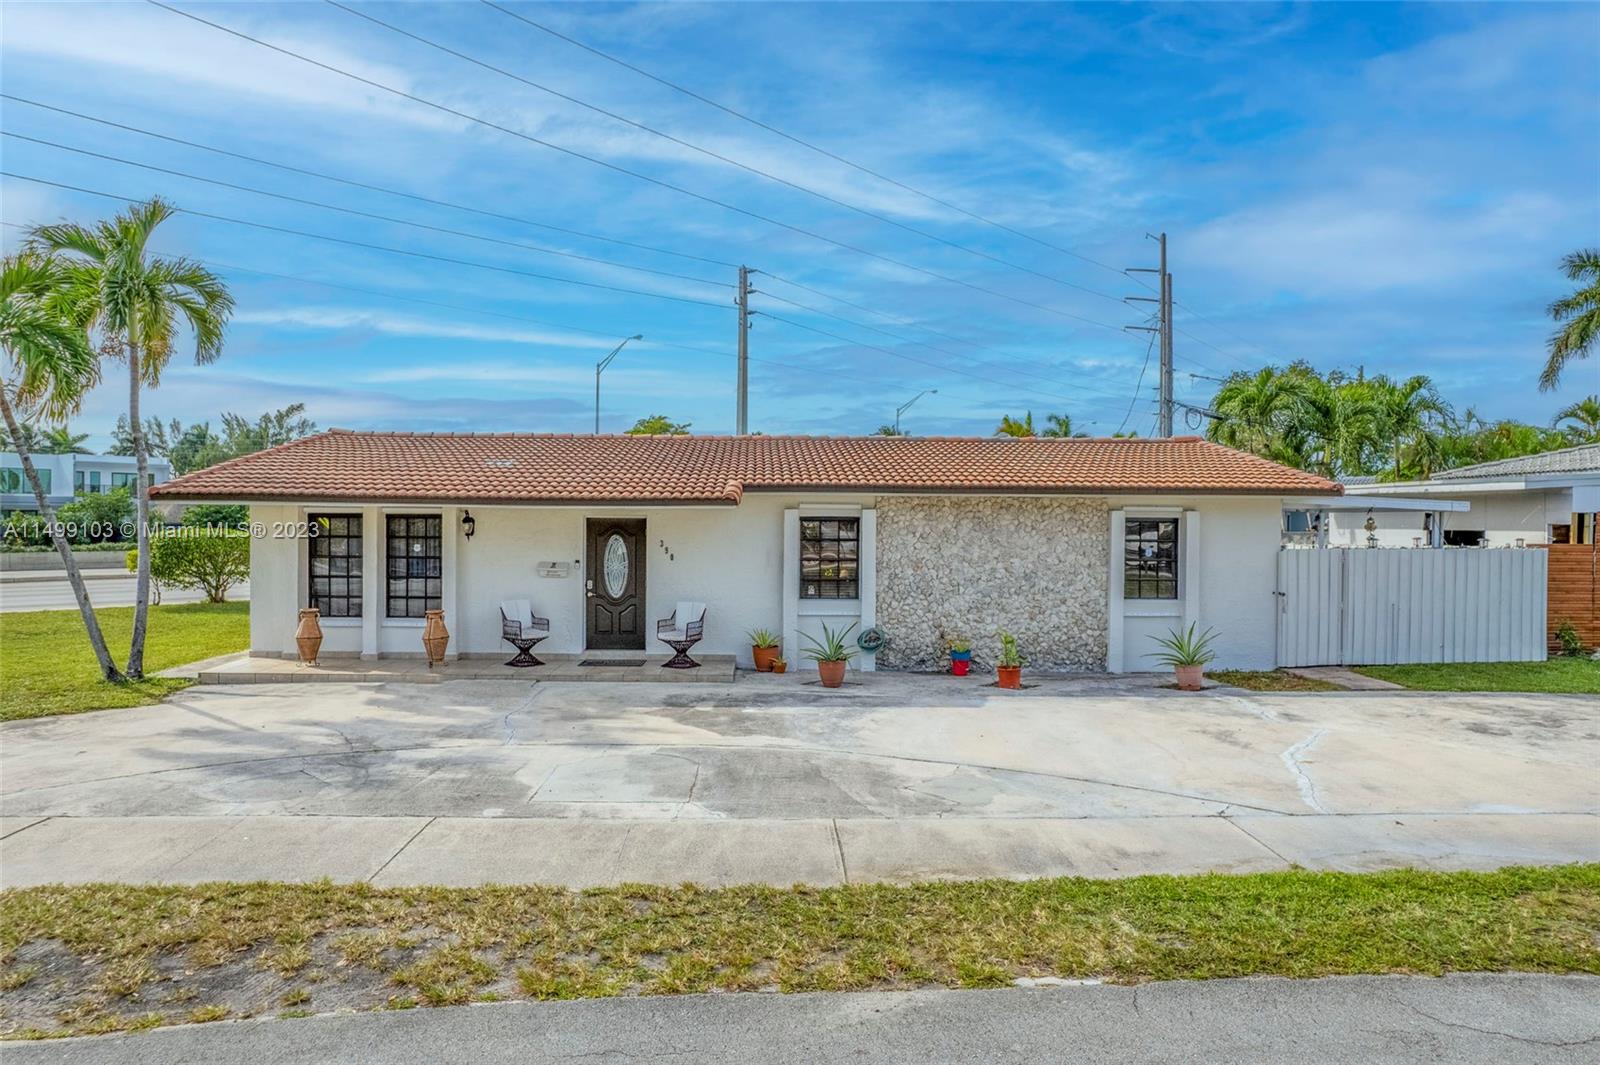 Property for Sale at 390 Cir Dr, Hialeah, Miami-Dade County, Florida - Bedrooms: 6 
Bathrooms: 3  - $839,000